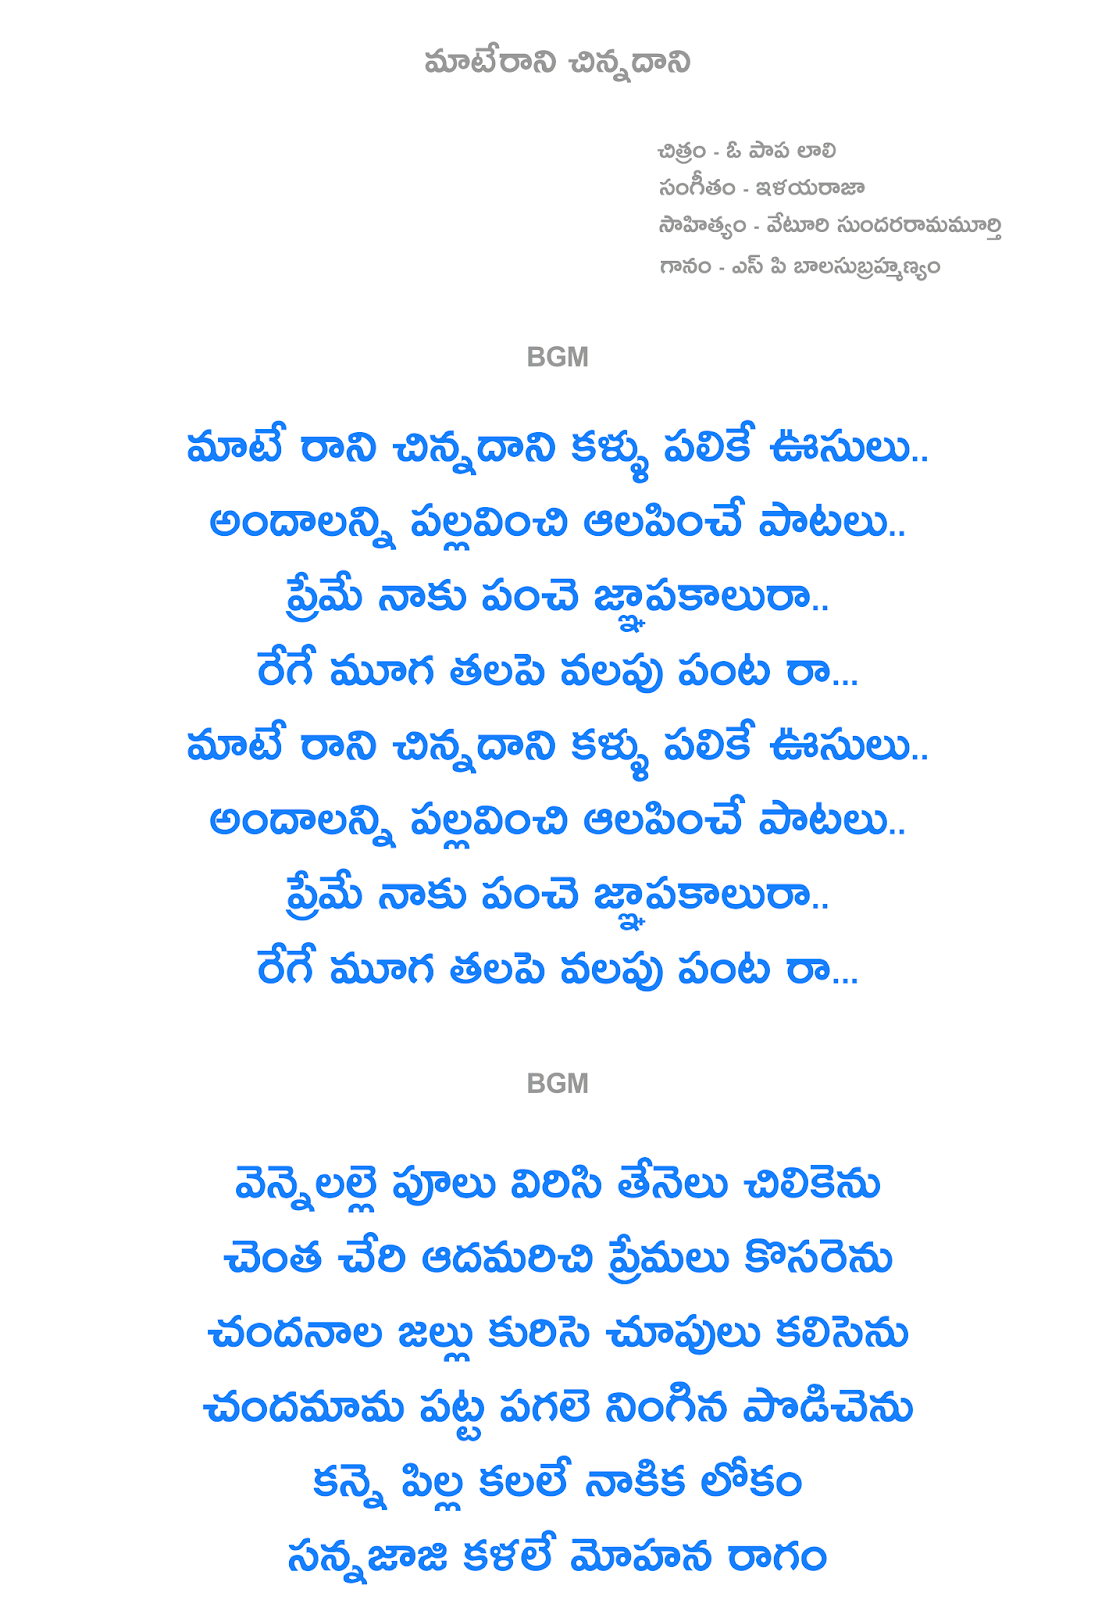 Maate Raani Chinnadaani Song Lyrics In Telugu From O Paapa Laali O bangaru rangula chilaka : maate raani chinnadaani song lyrics in